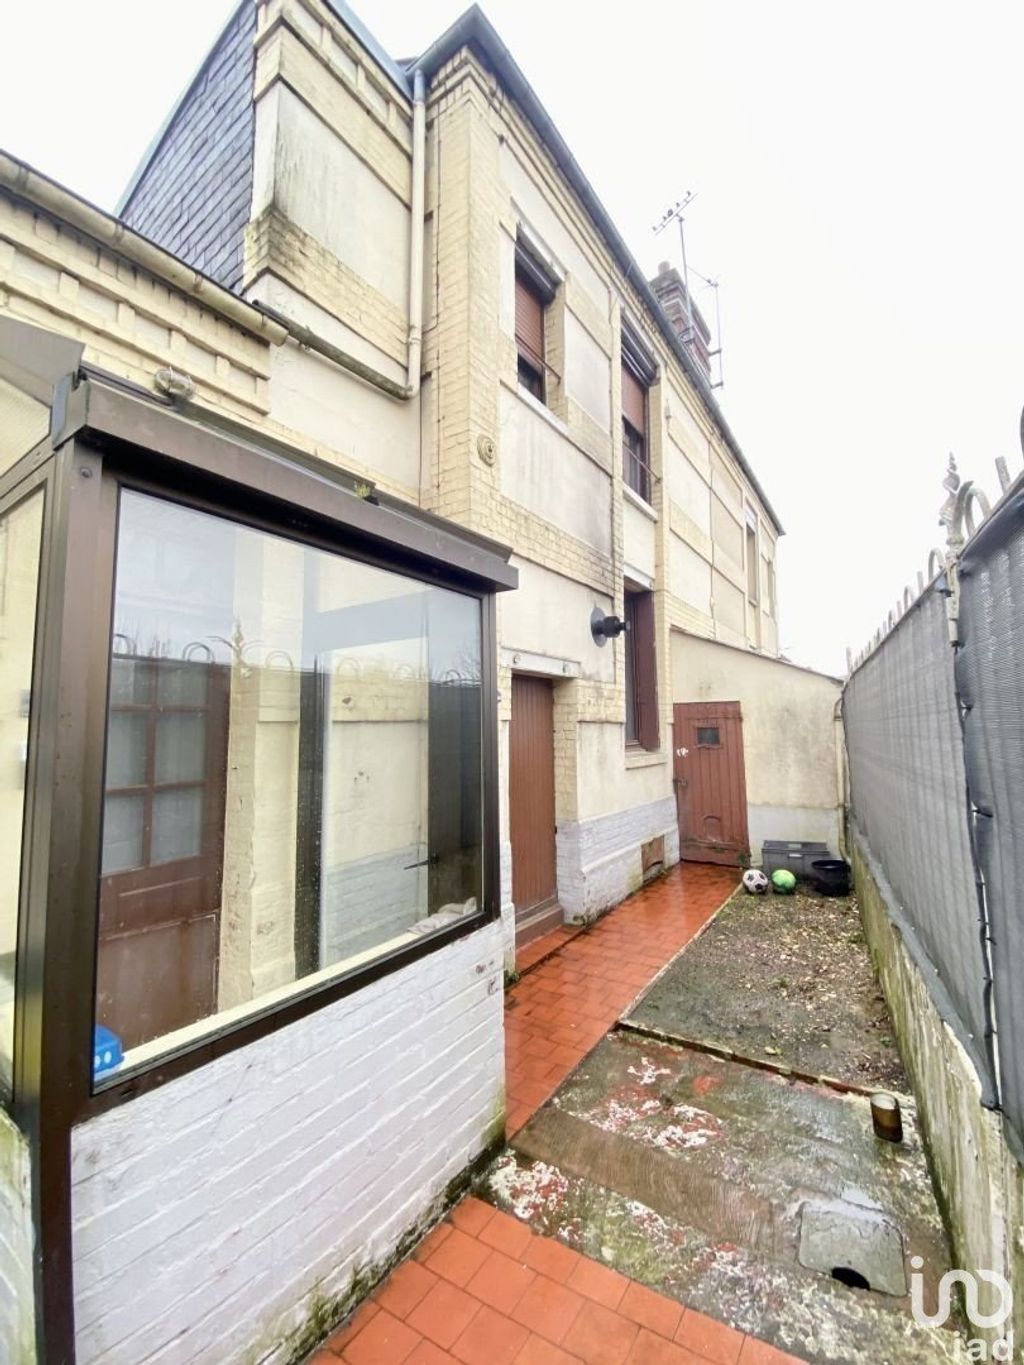 Achat maison à vendre 1 chambre 79 m² - Gournay-en-Bray